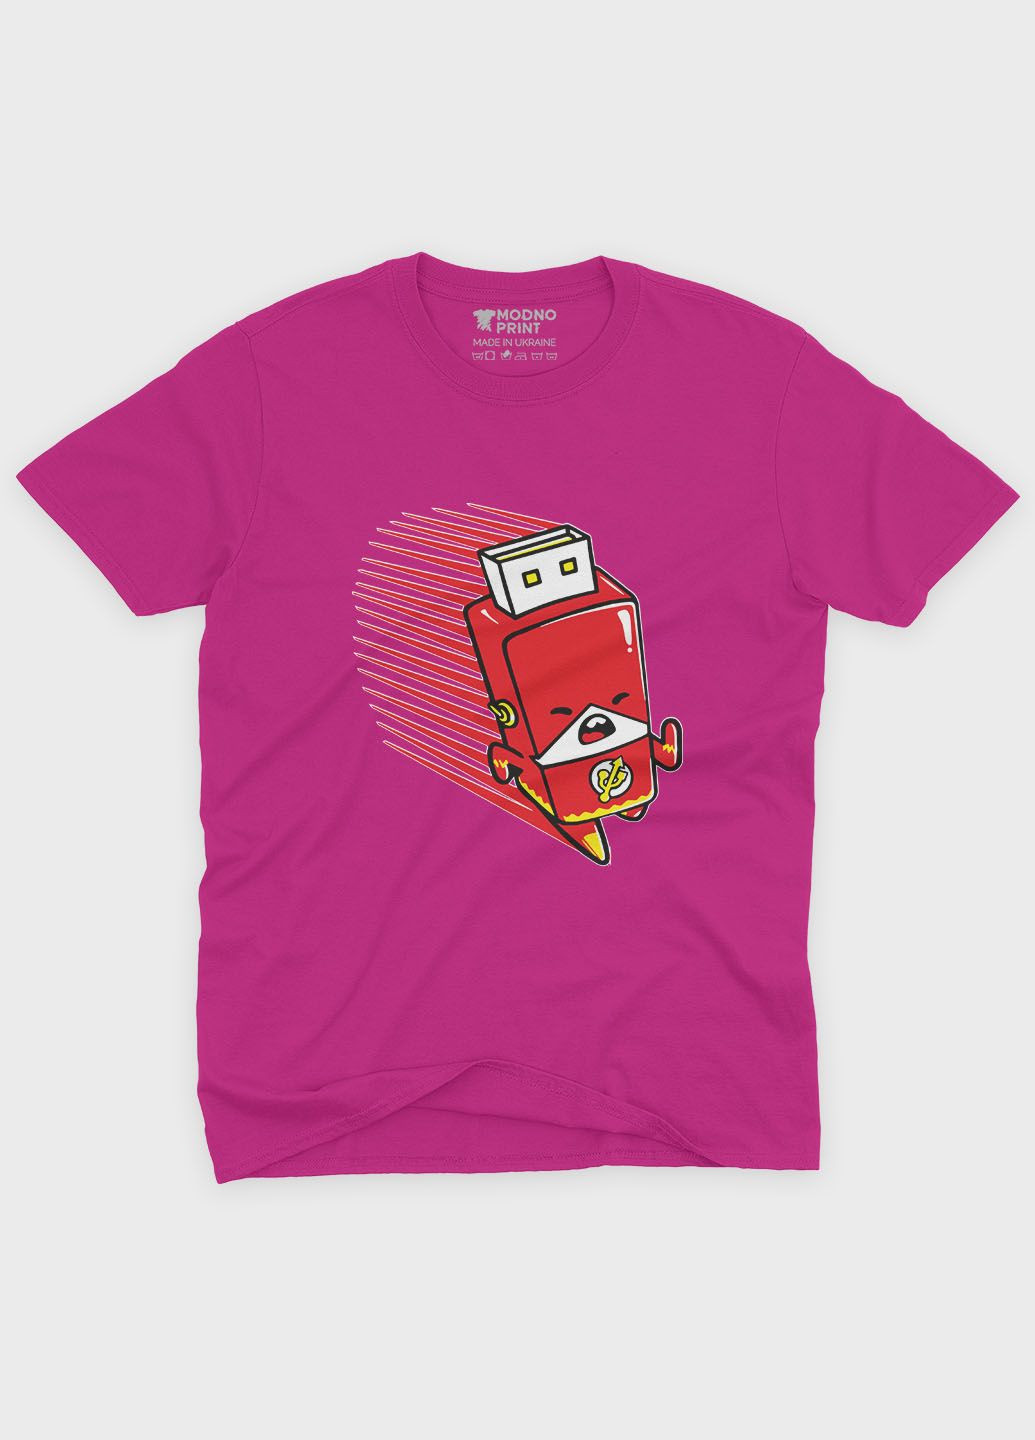 Розовая демисезонная футболка для девочки с принтом супергероя - флэш (ts001-1-fuxj-006-010-004-g) Modno